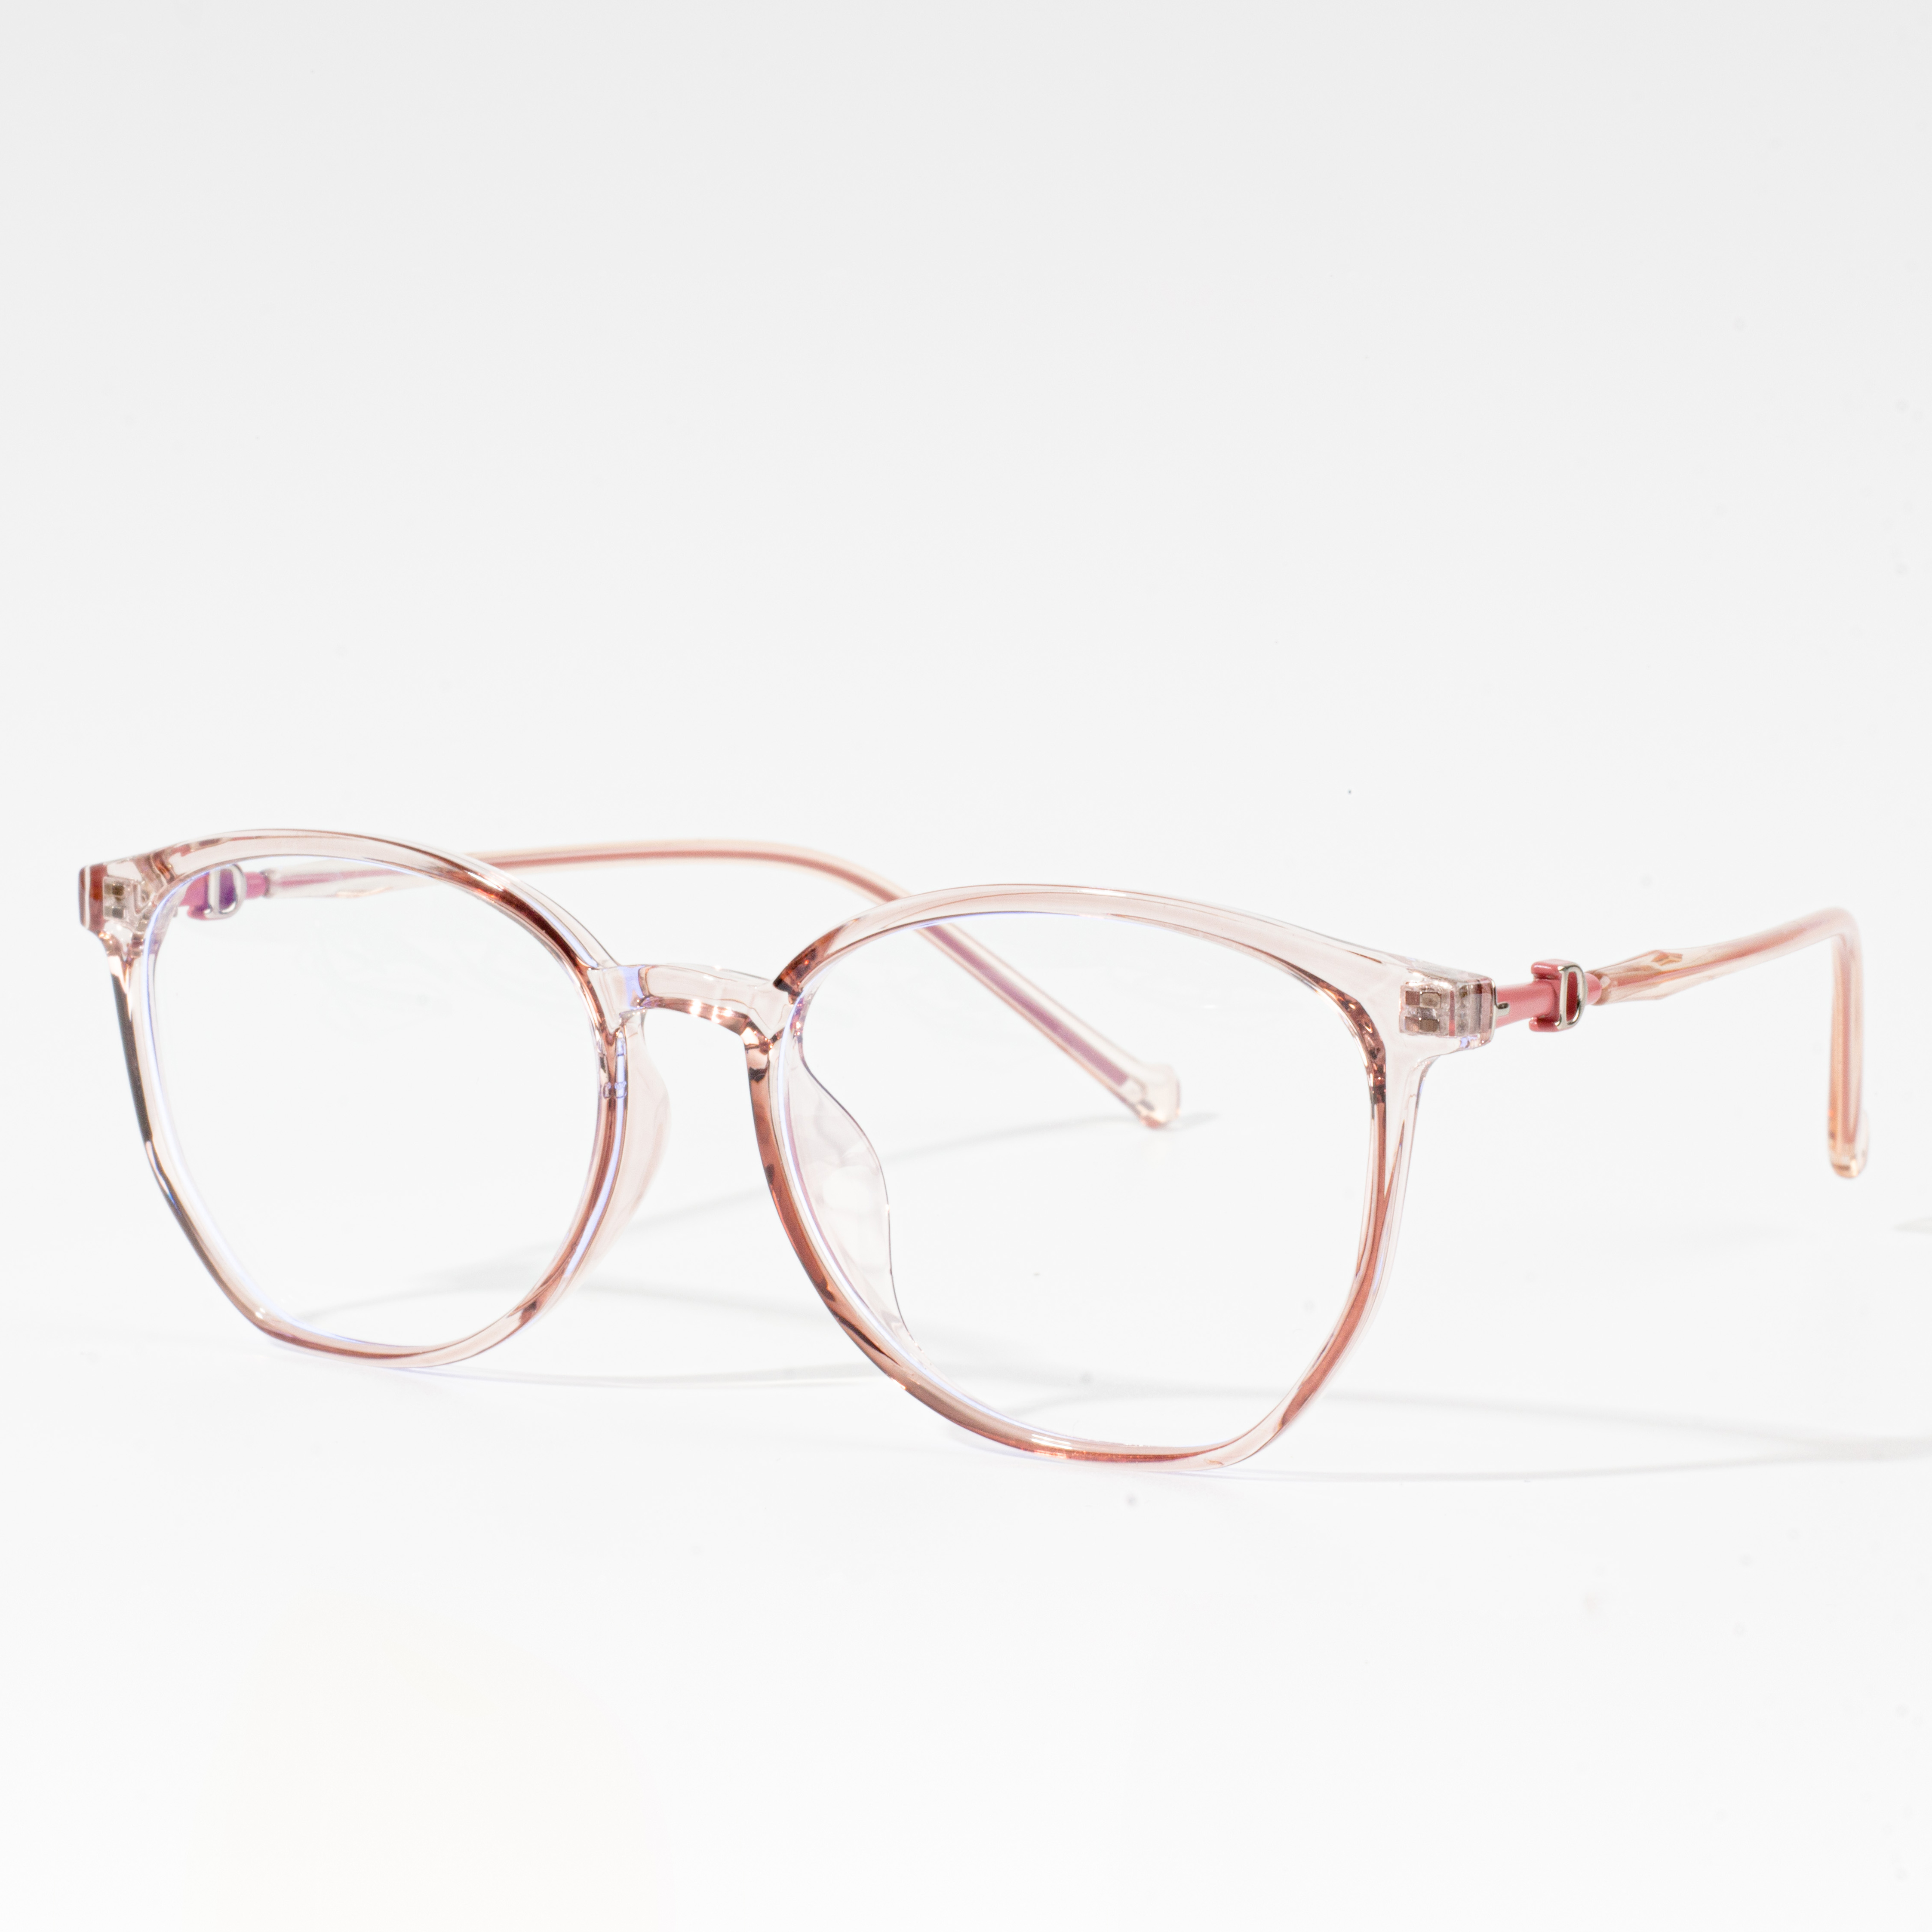 eyeglass frames for sale